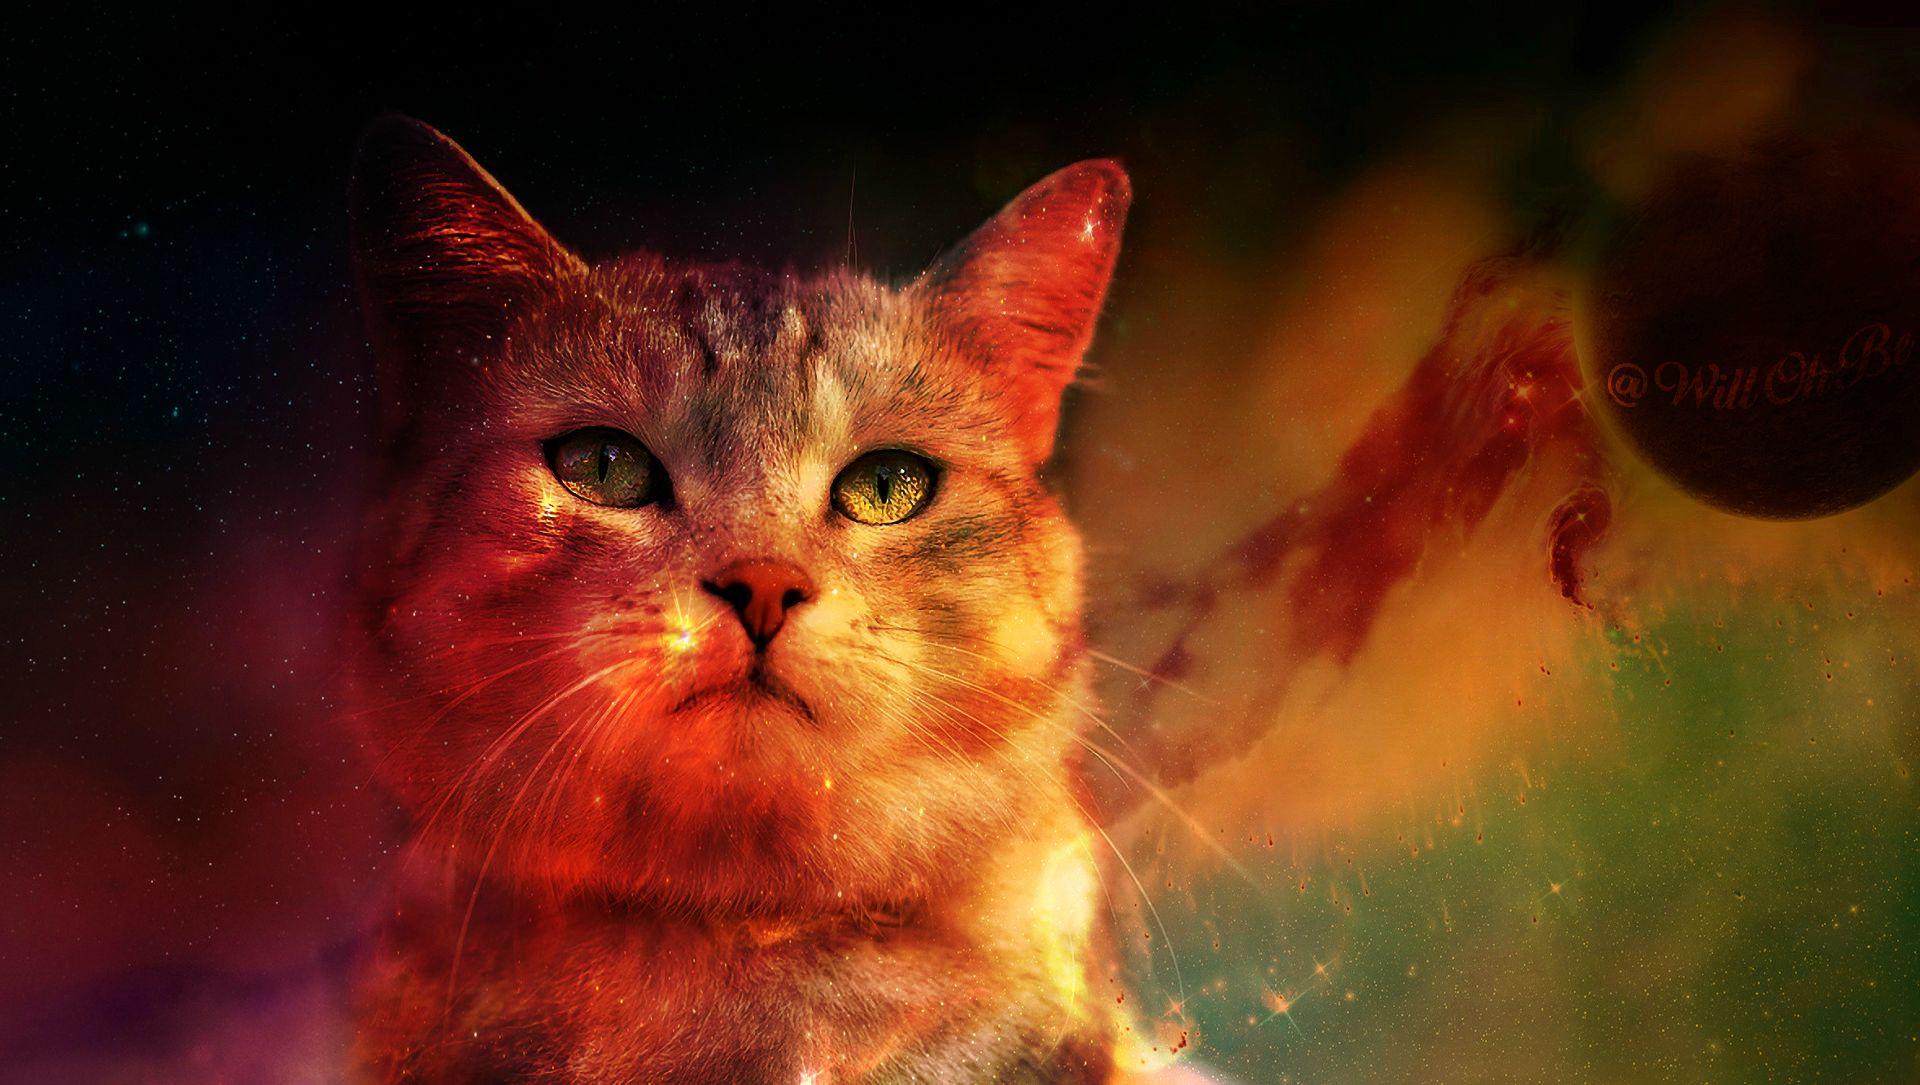 Cat In Space Digital Art Planet Wallpaper, HD Animals 4K